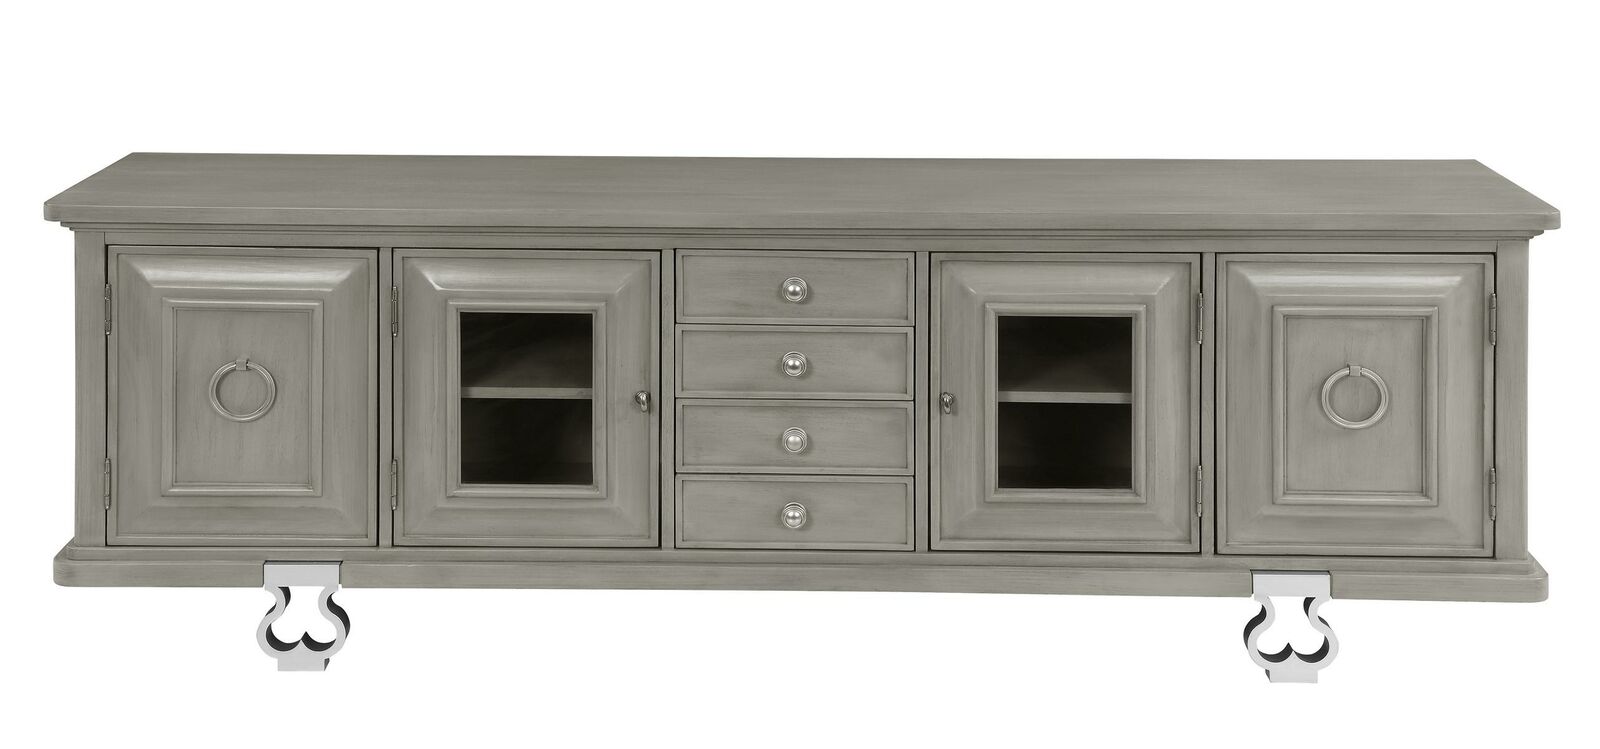 Luxury sideboard tv lowboard rtv xxl cabinet table living room wood hotel furniture